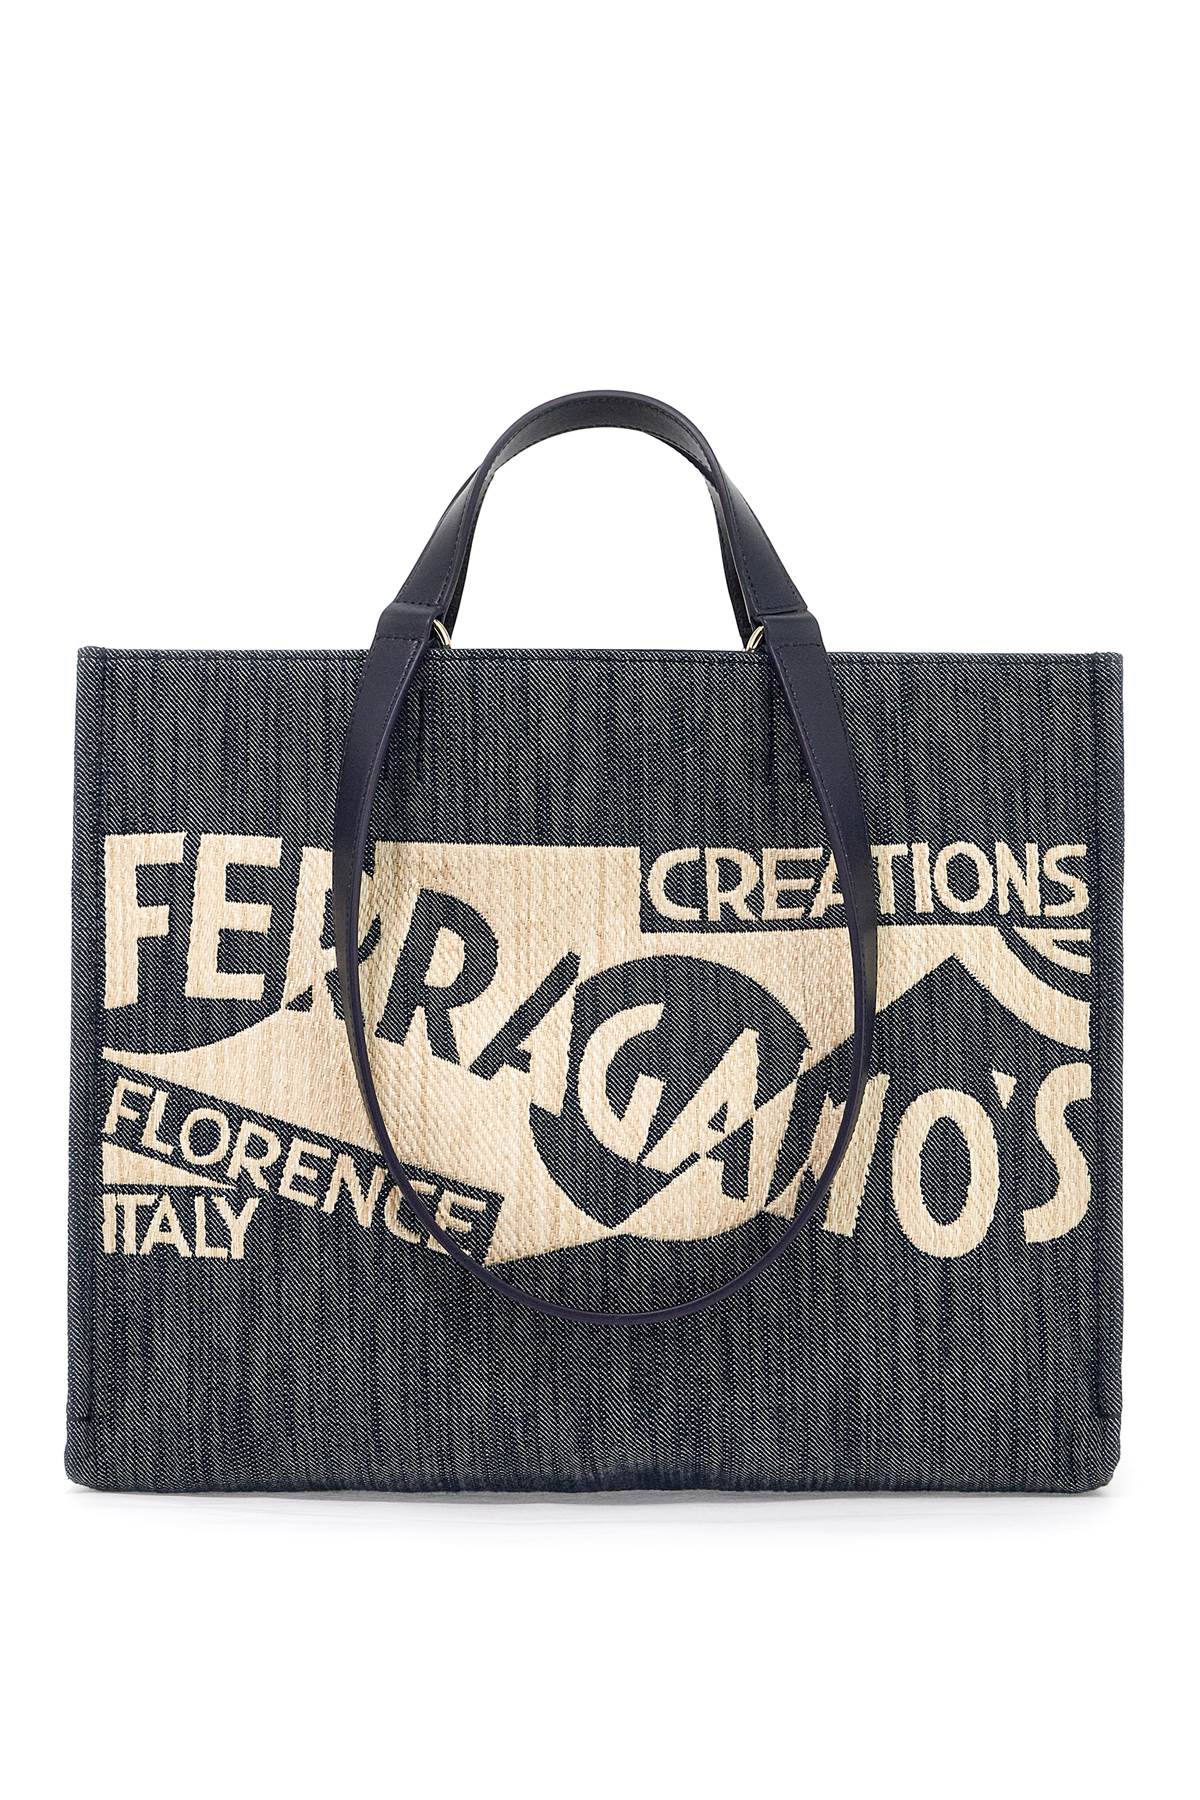 FERRAGAMO LOGO PRINTED Tote Handbag Handbag (M)